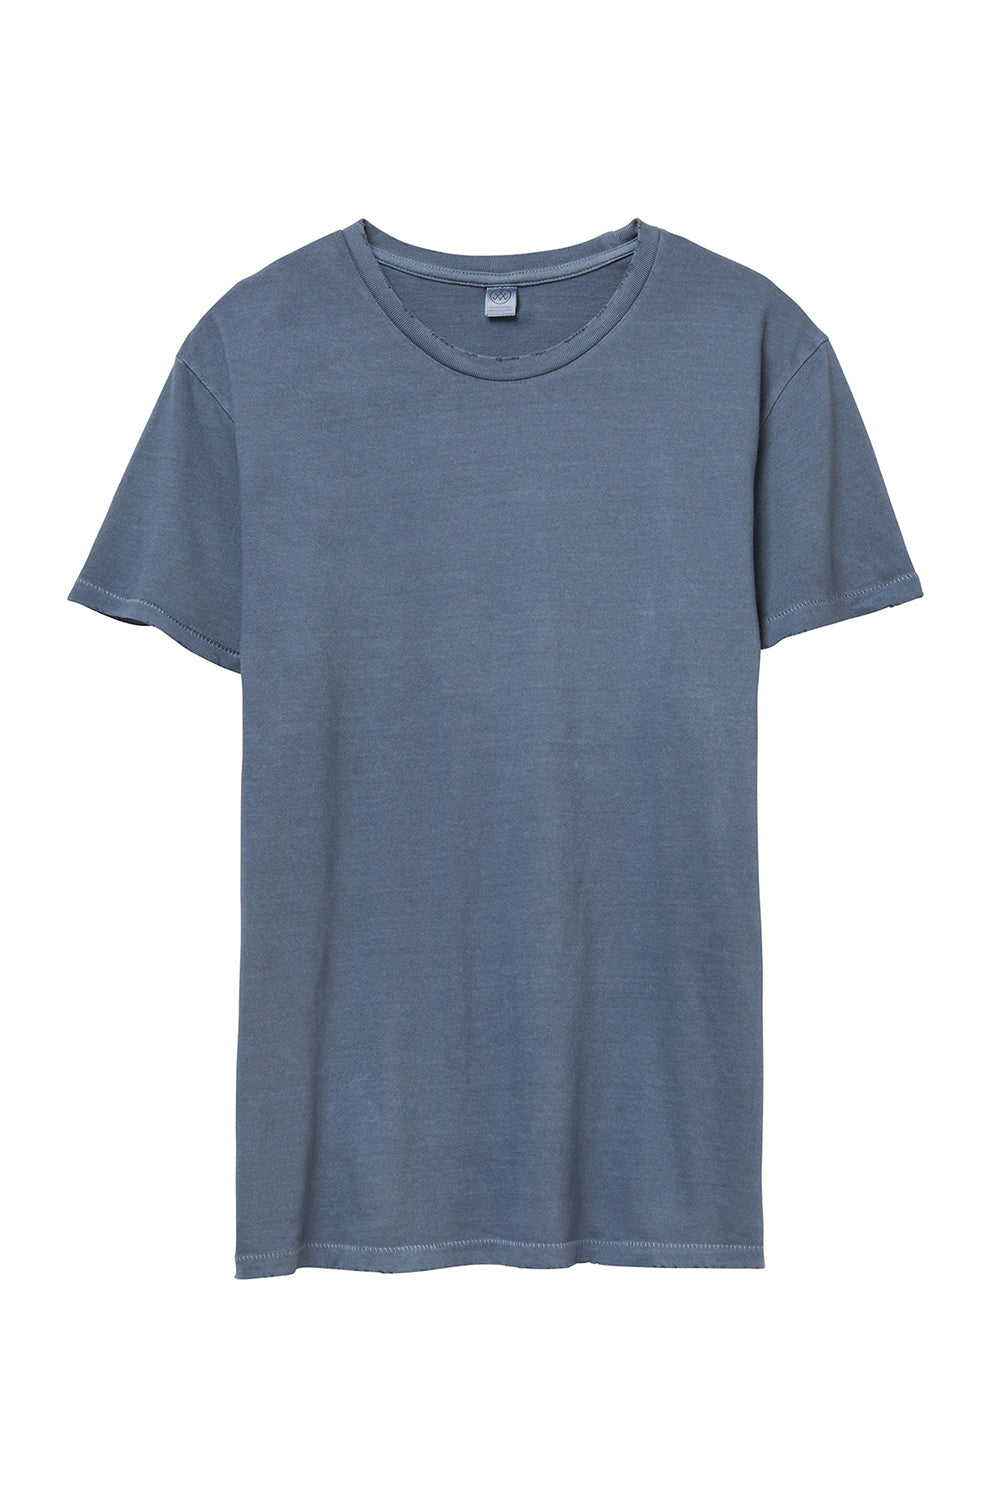 Alternative 04850C1/4850 Mens Heritage Distressed Short Sleeve Crewneck T-Shirt Dark Blue Flat Front